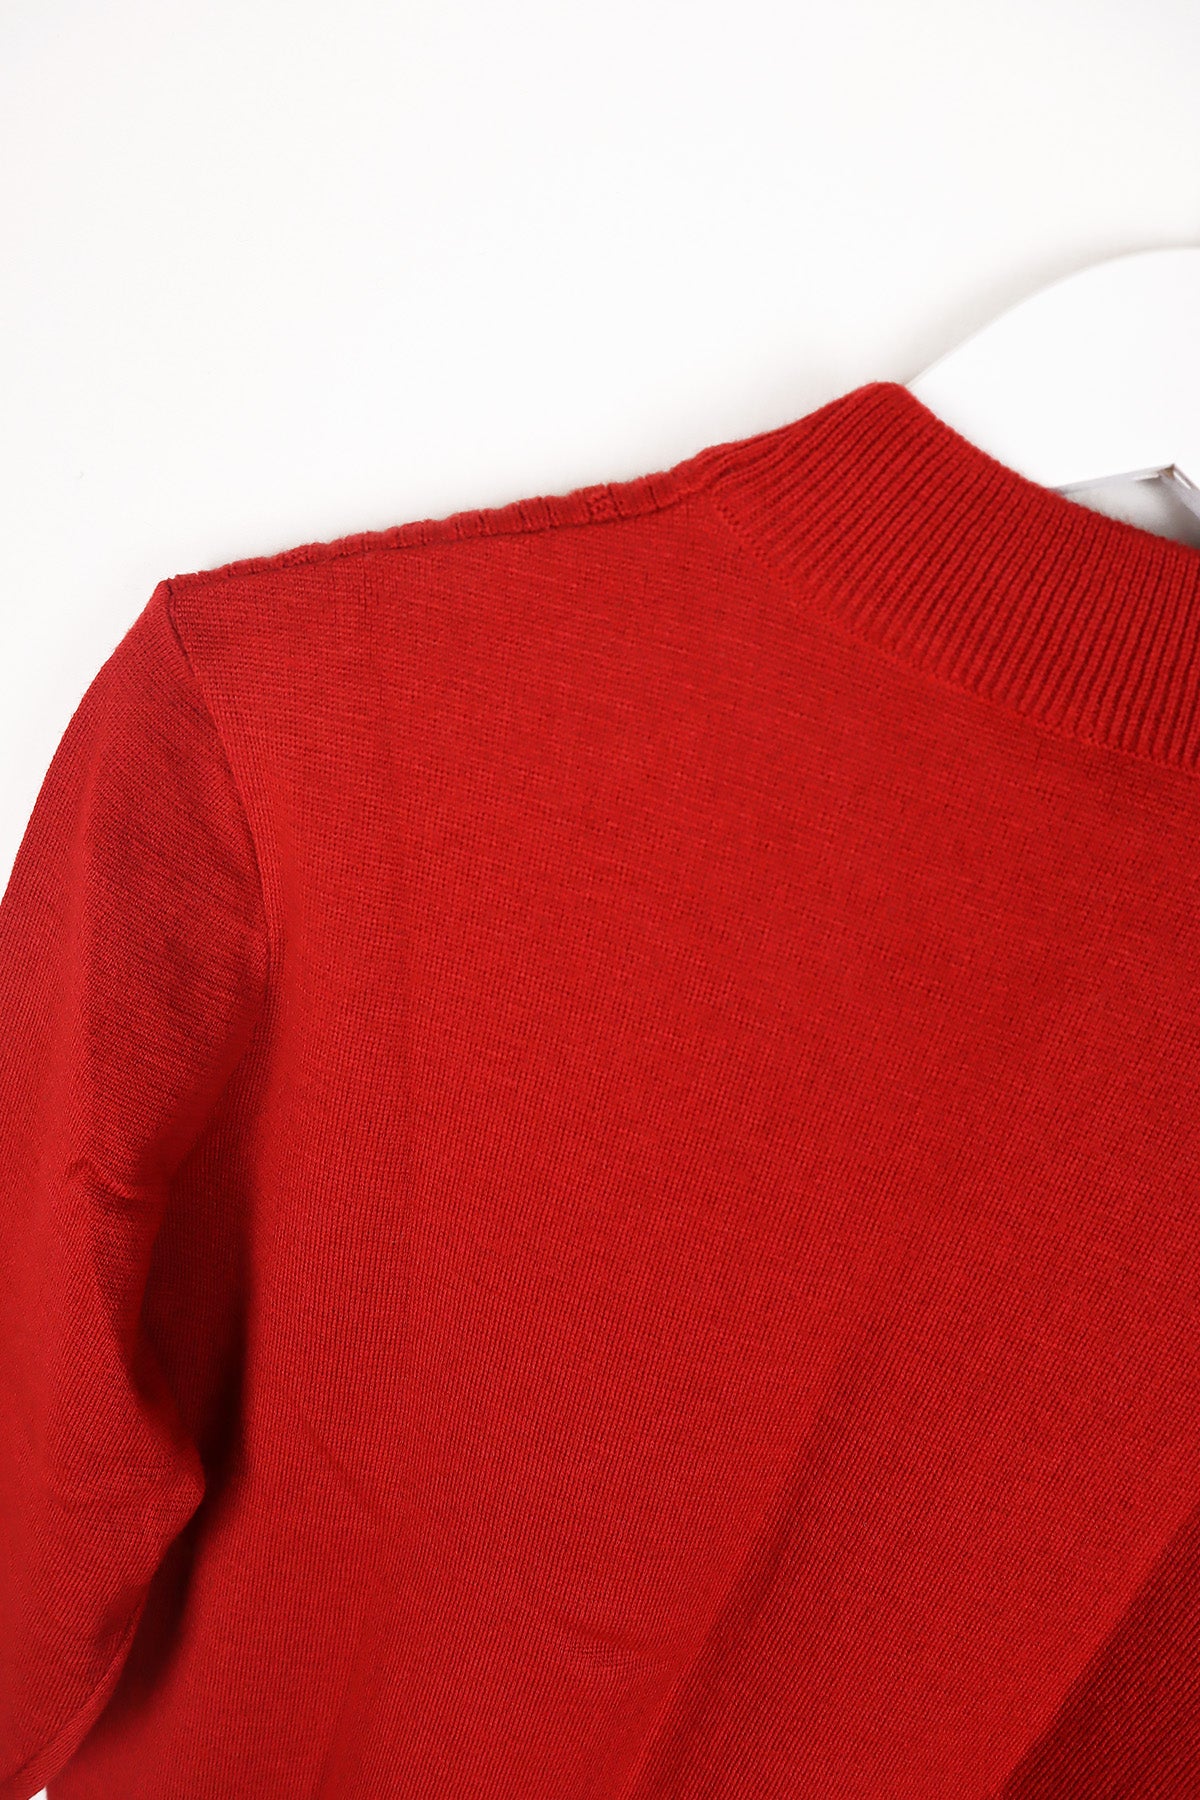 Feinstrick Vintage Pullover Rot ( Gr. S/M )